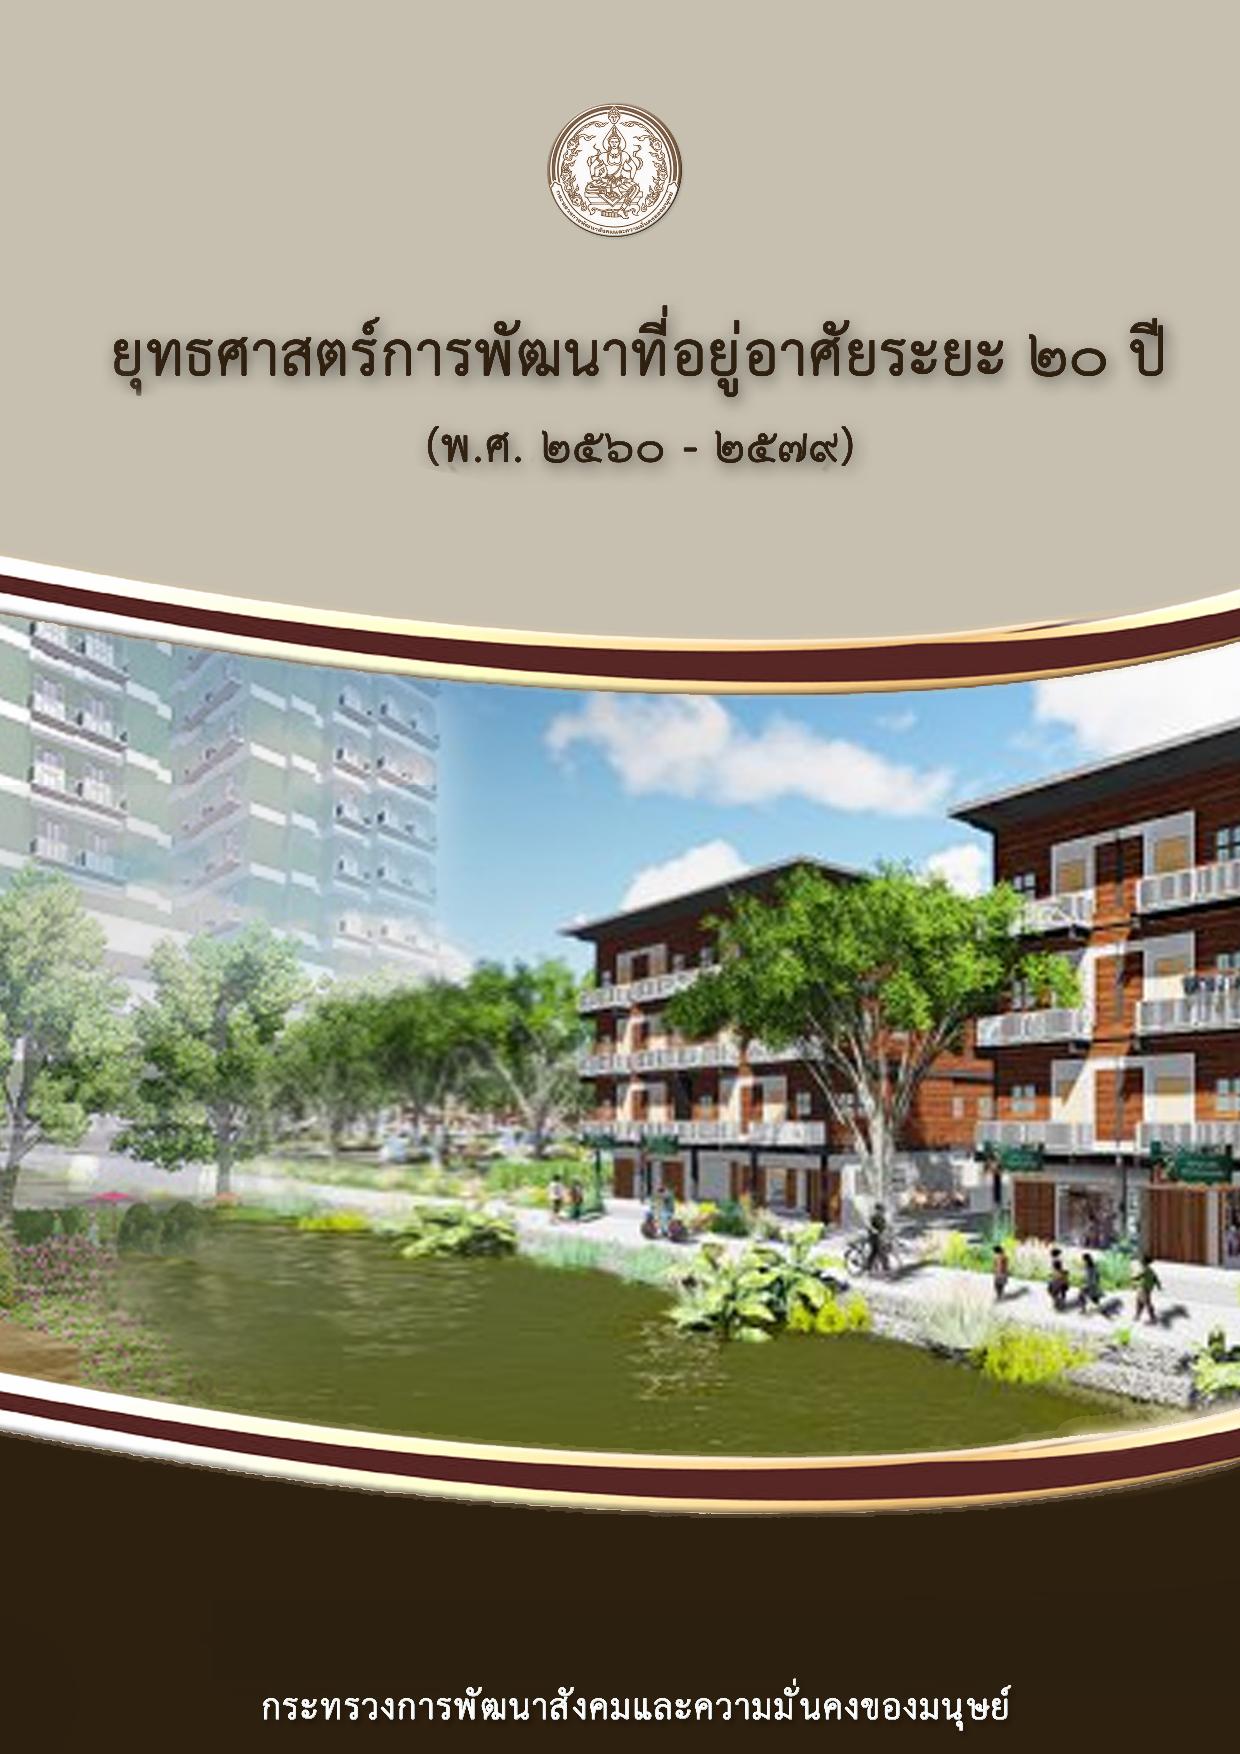 20-year National Housing Development Plan, Thailand (Thai Only)